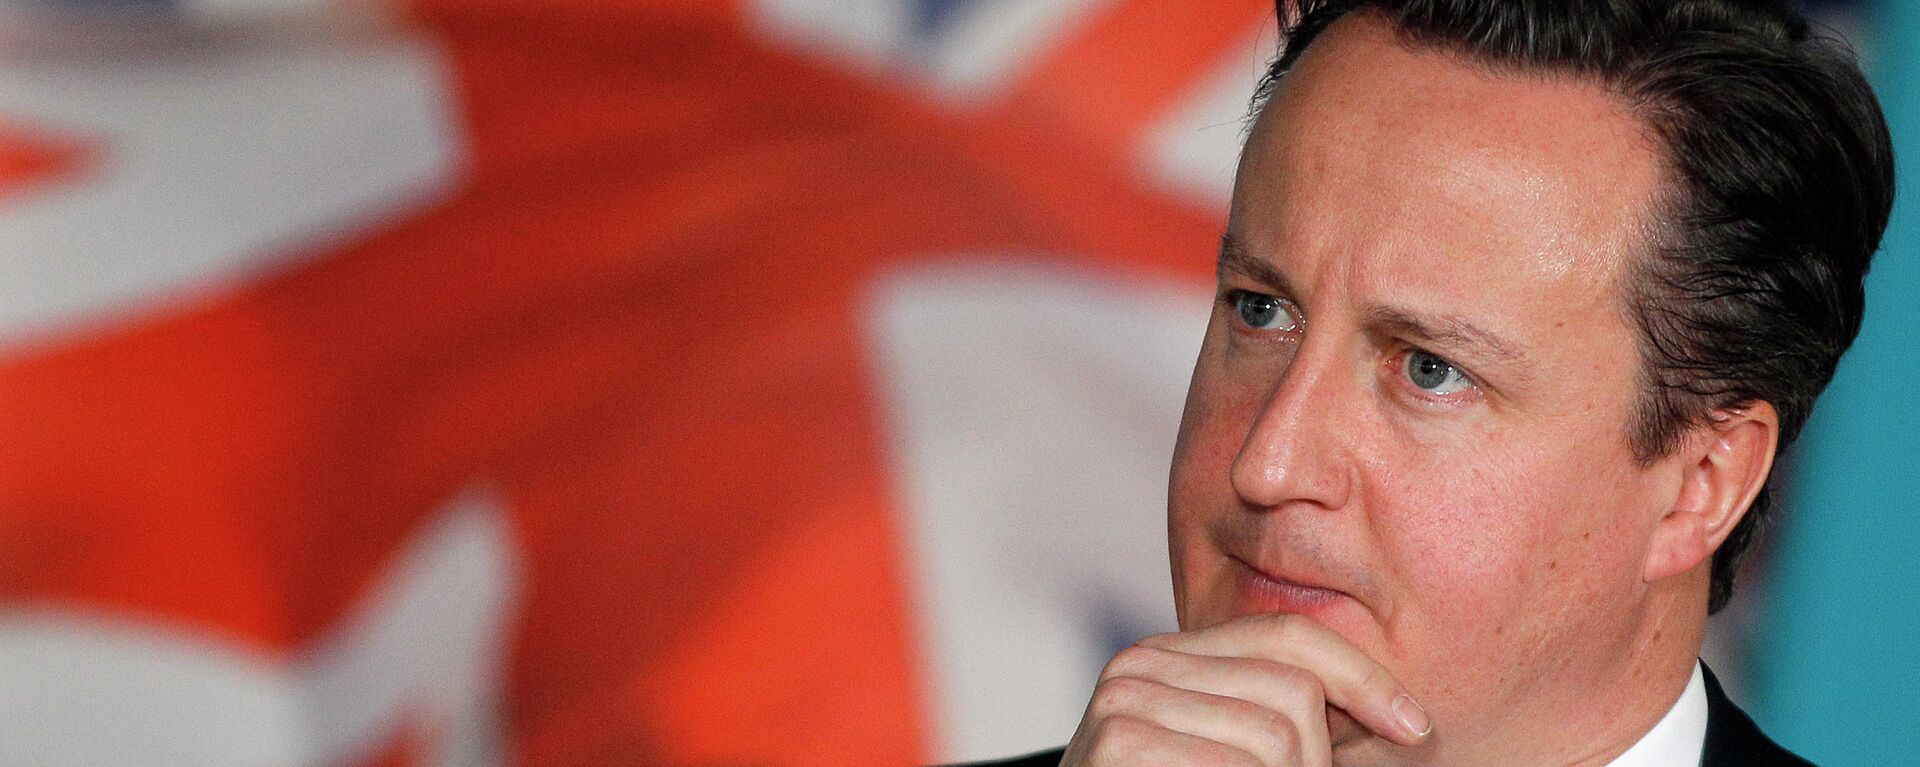 Ex primer ministro británico David Cameron - Sputnik Mundo, 1920, 13.04.2021